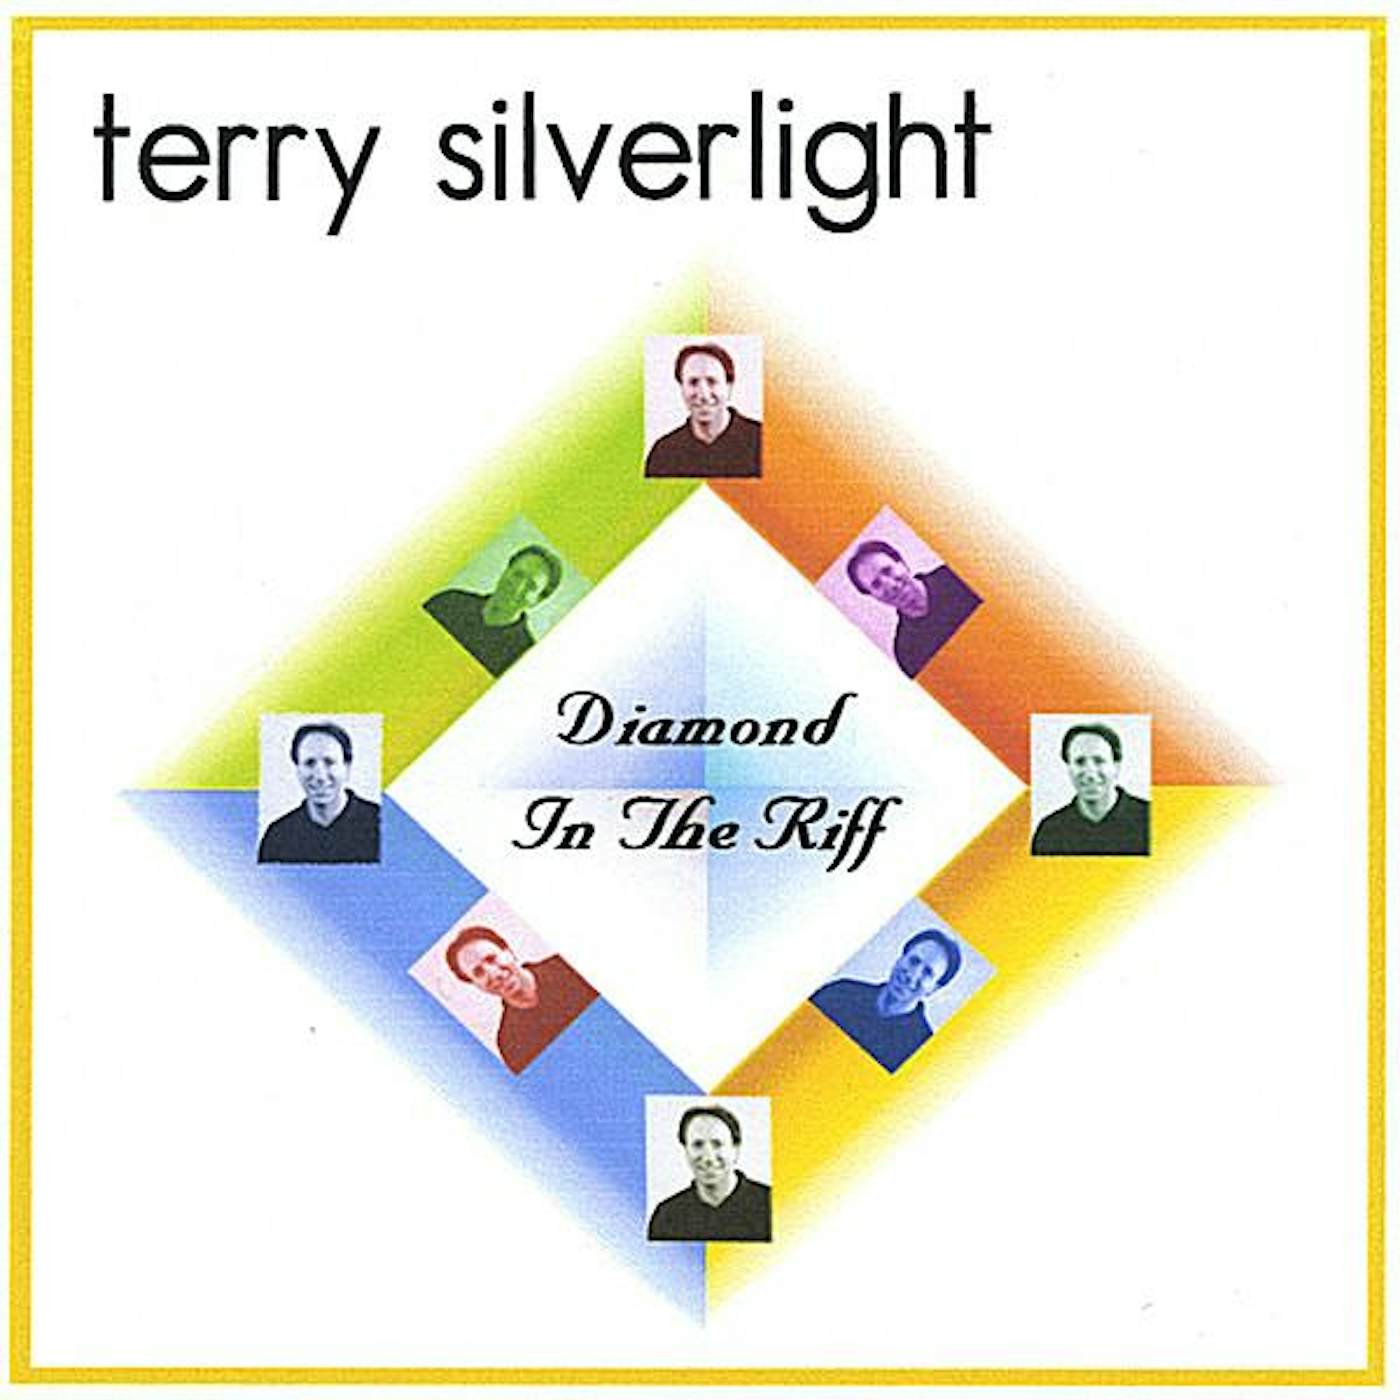 Terry Silverlight DIAMOND IN THE RIFF CD